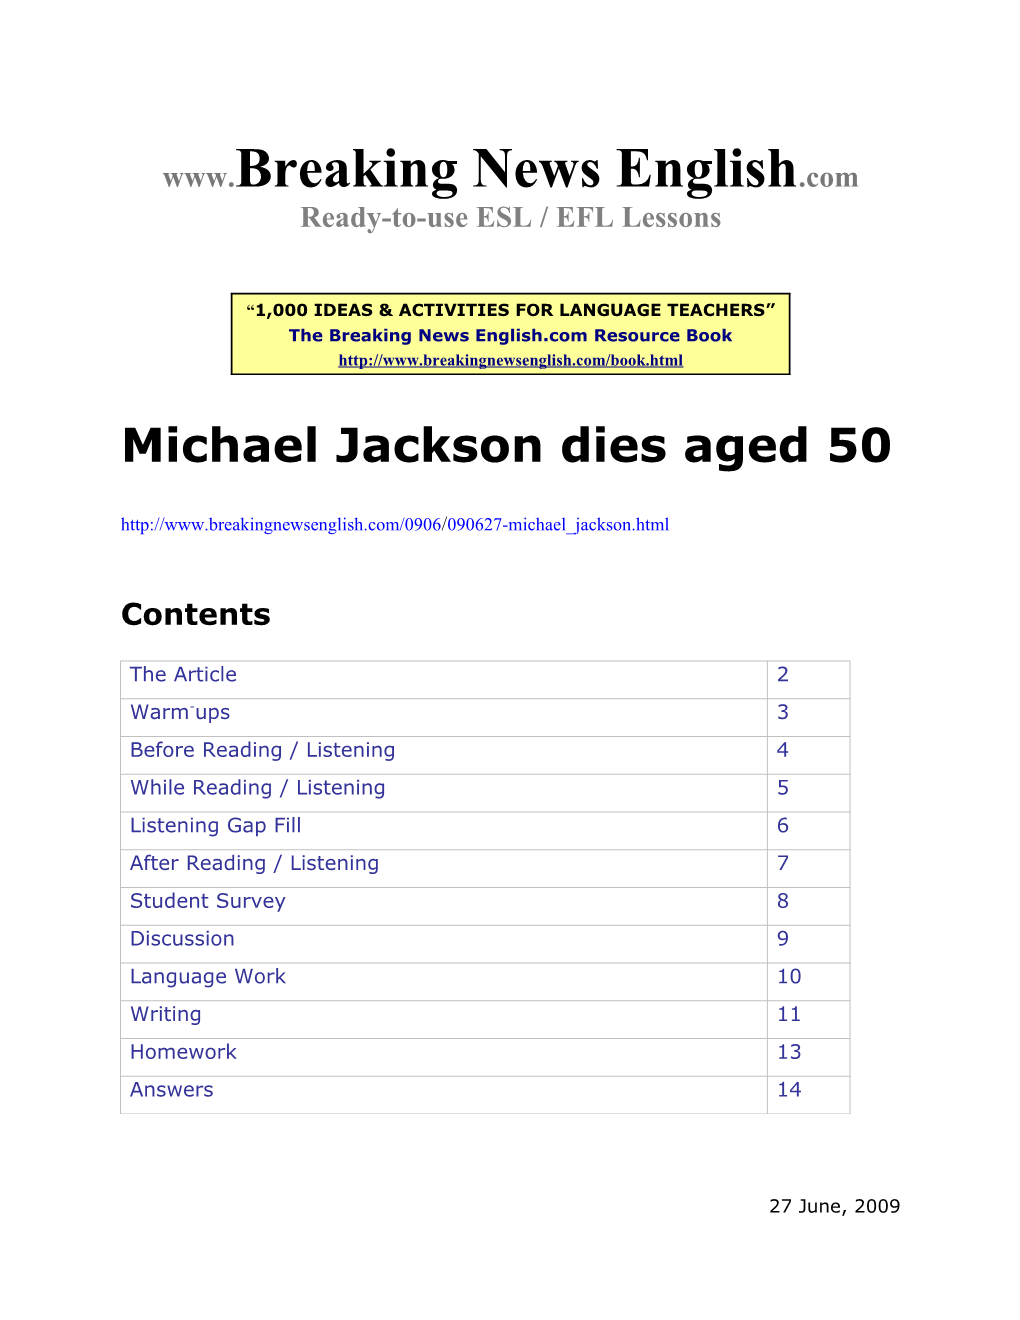 ESL Lesson: Michael Jackson Dies Aged 50